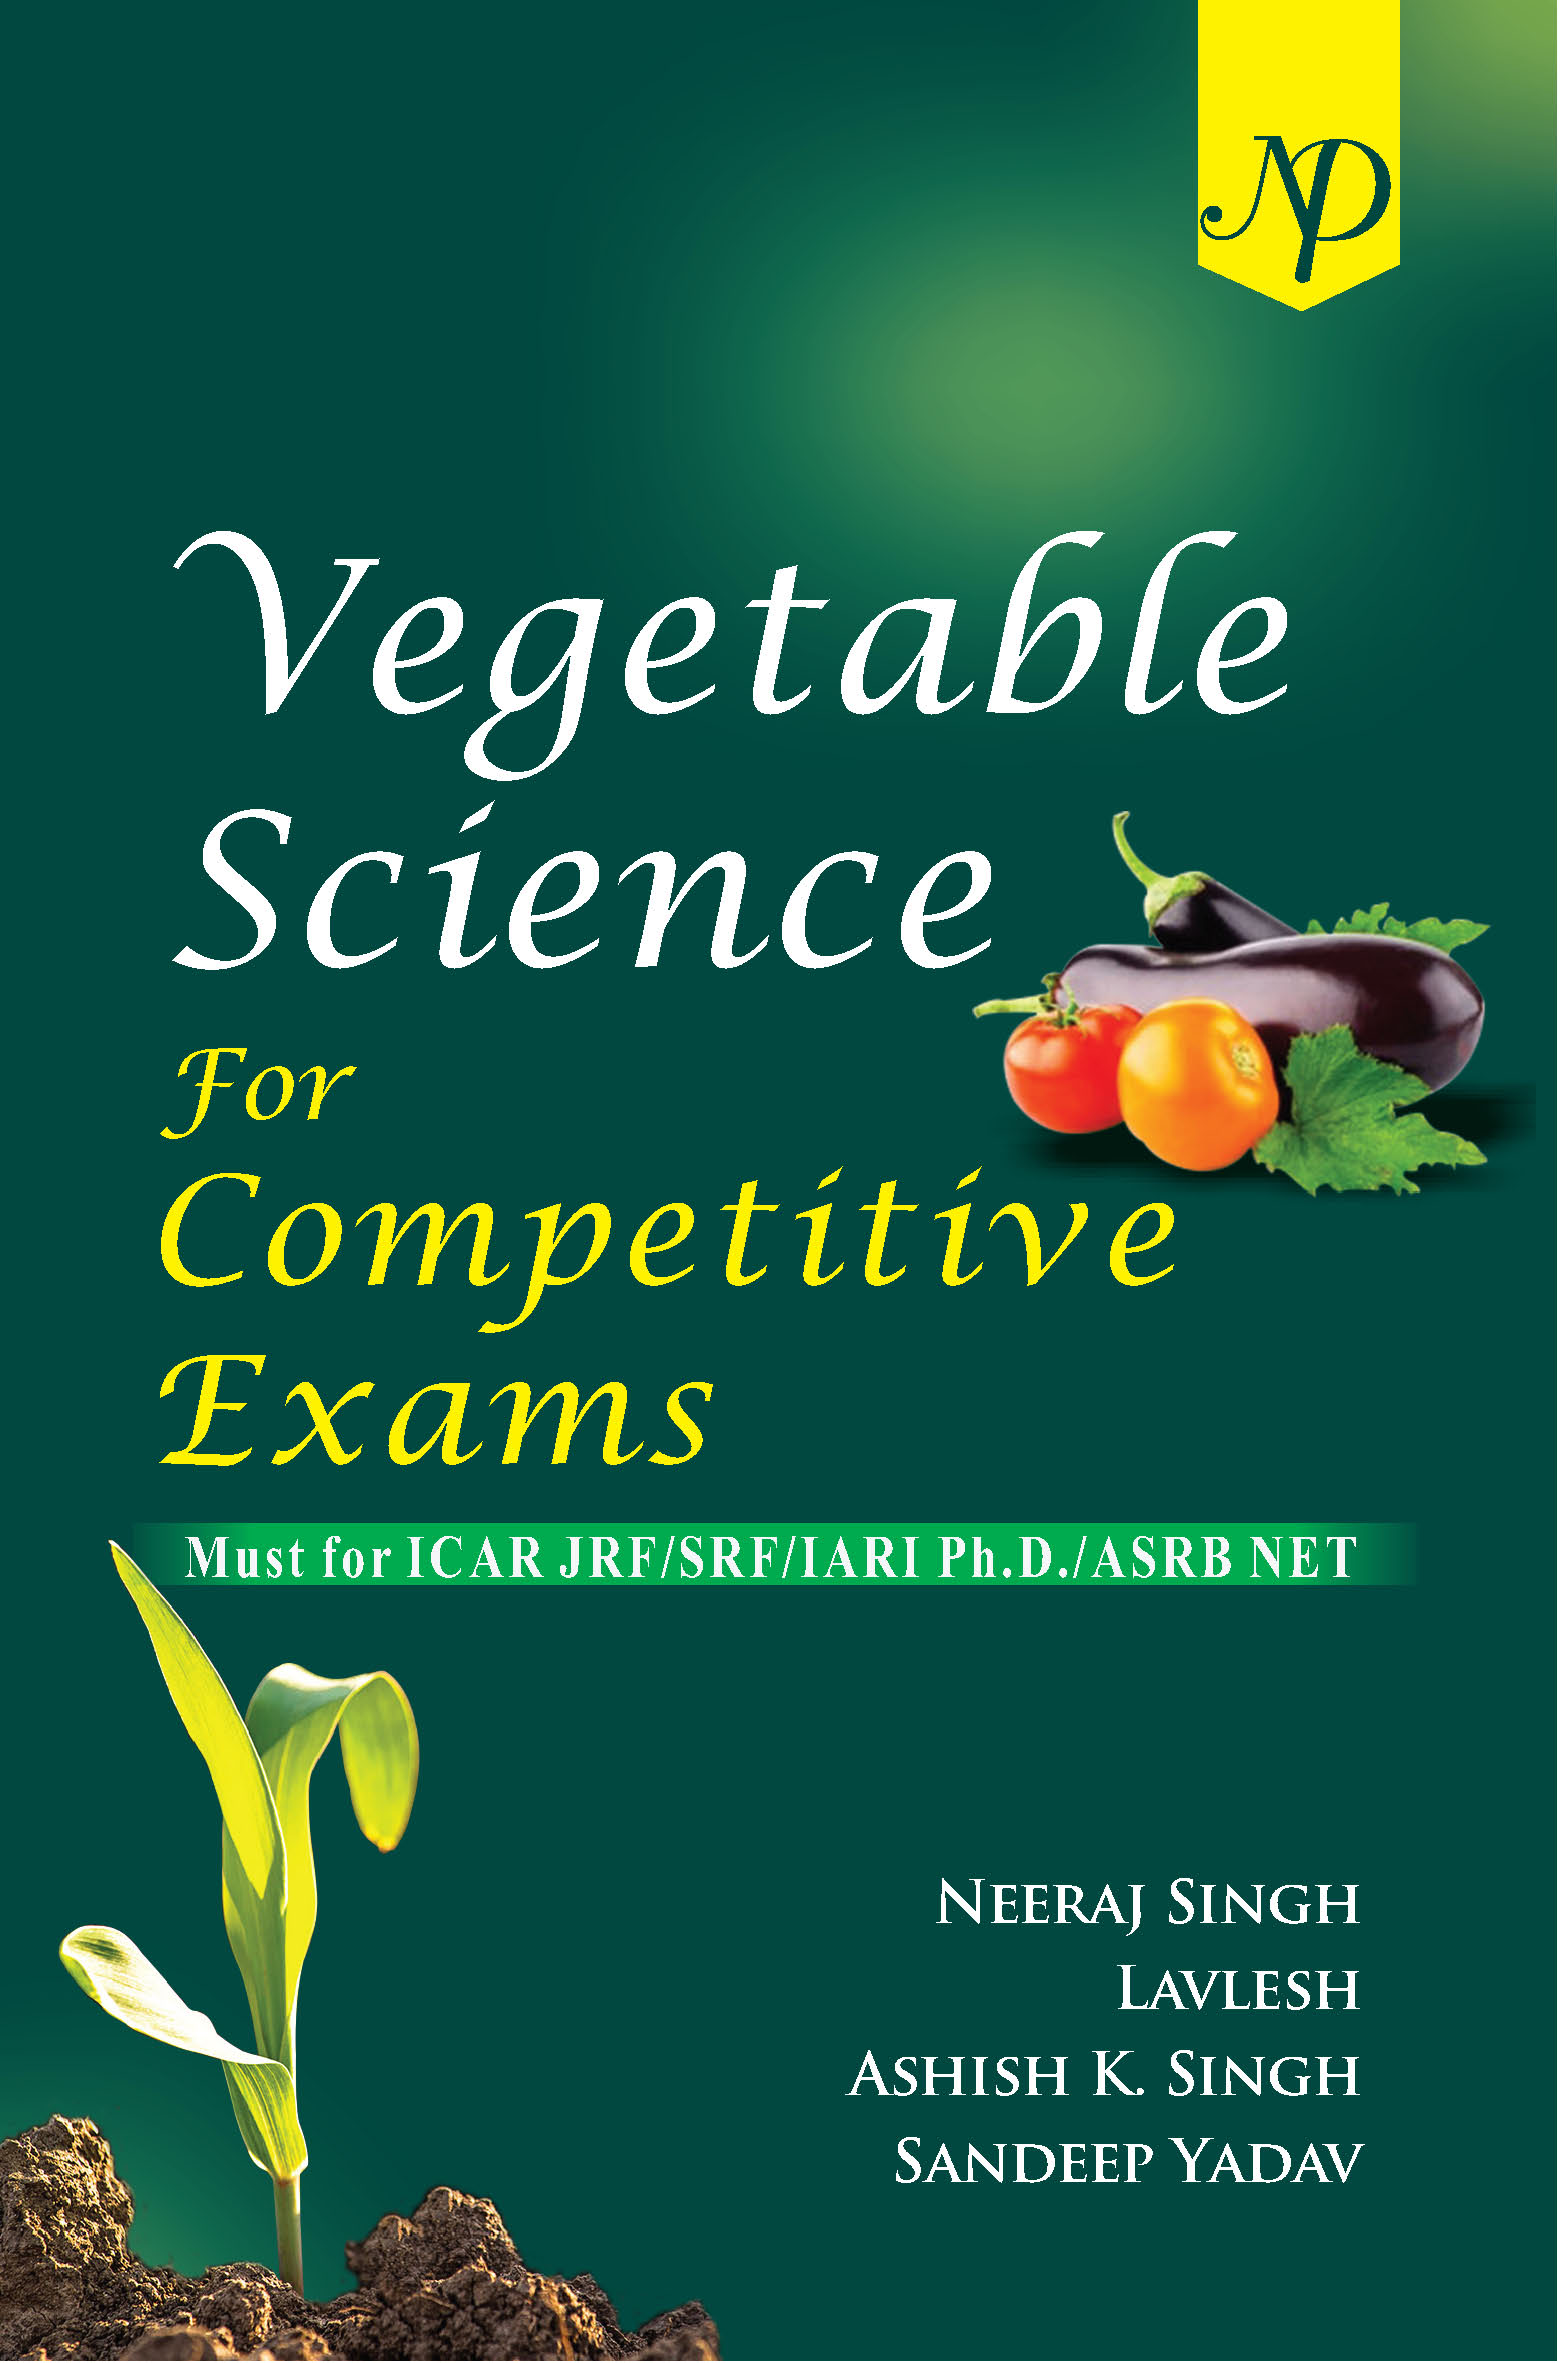 Vegetable science for competative exam.jpg